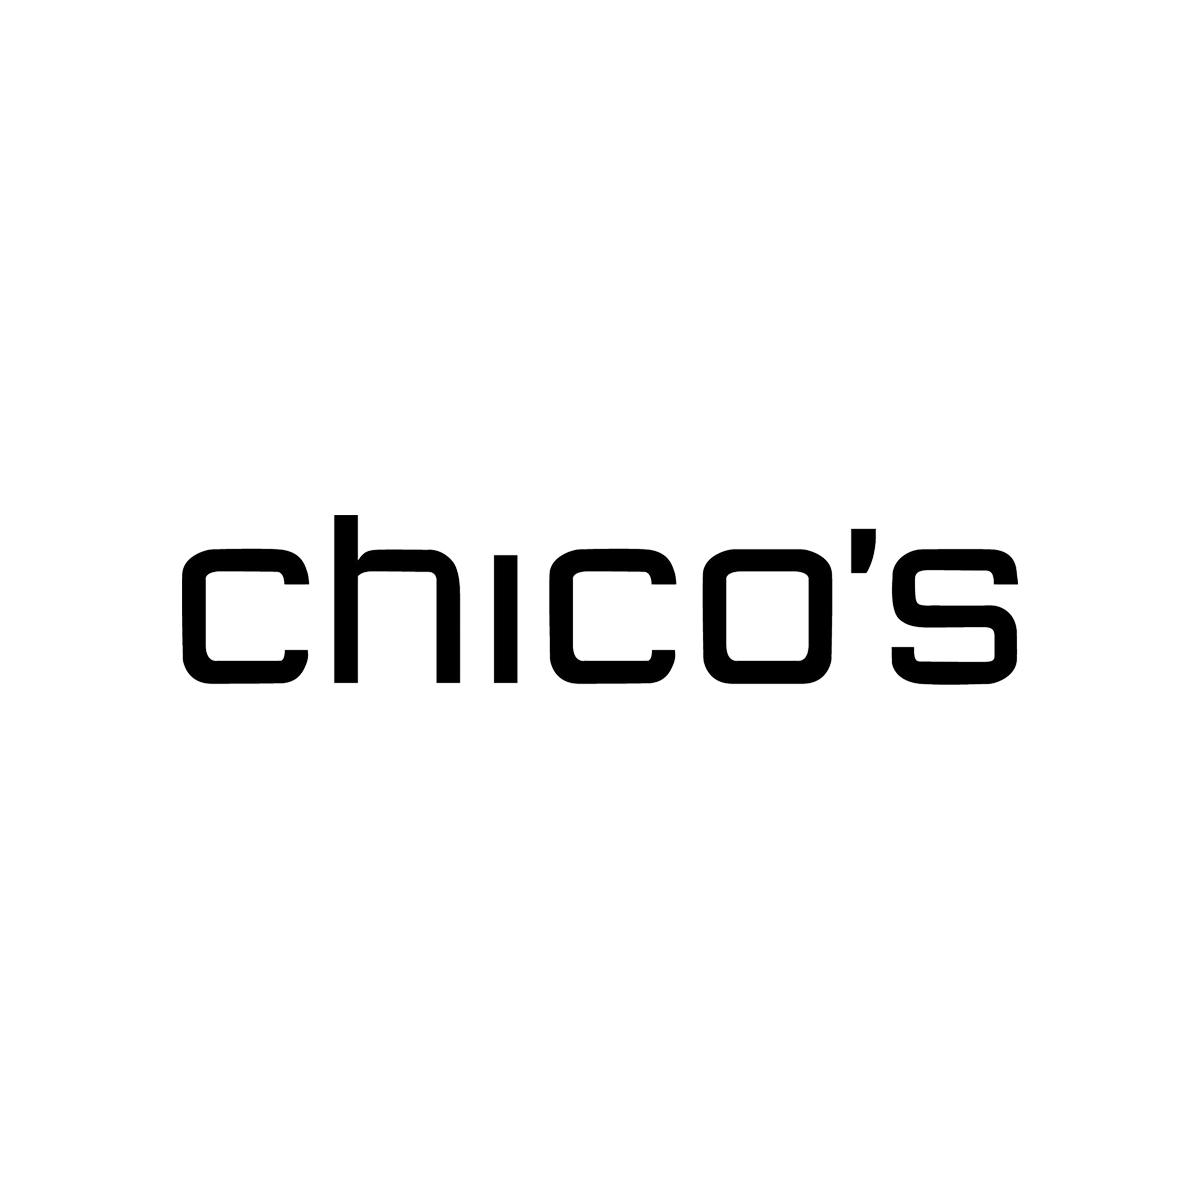 Chico's Brand Logo